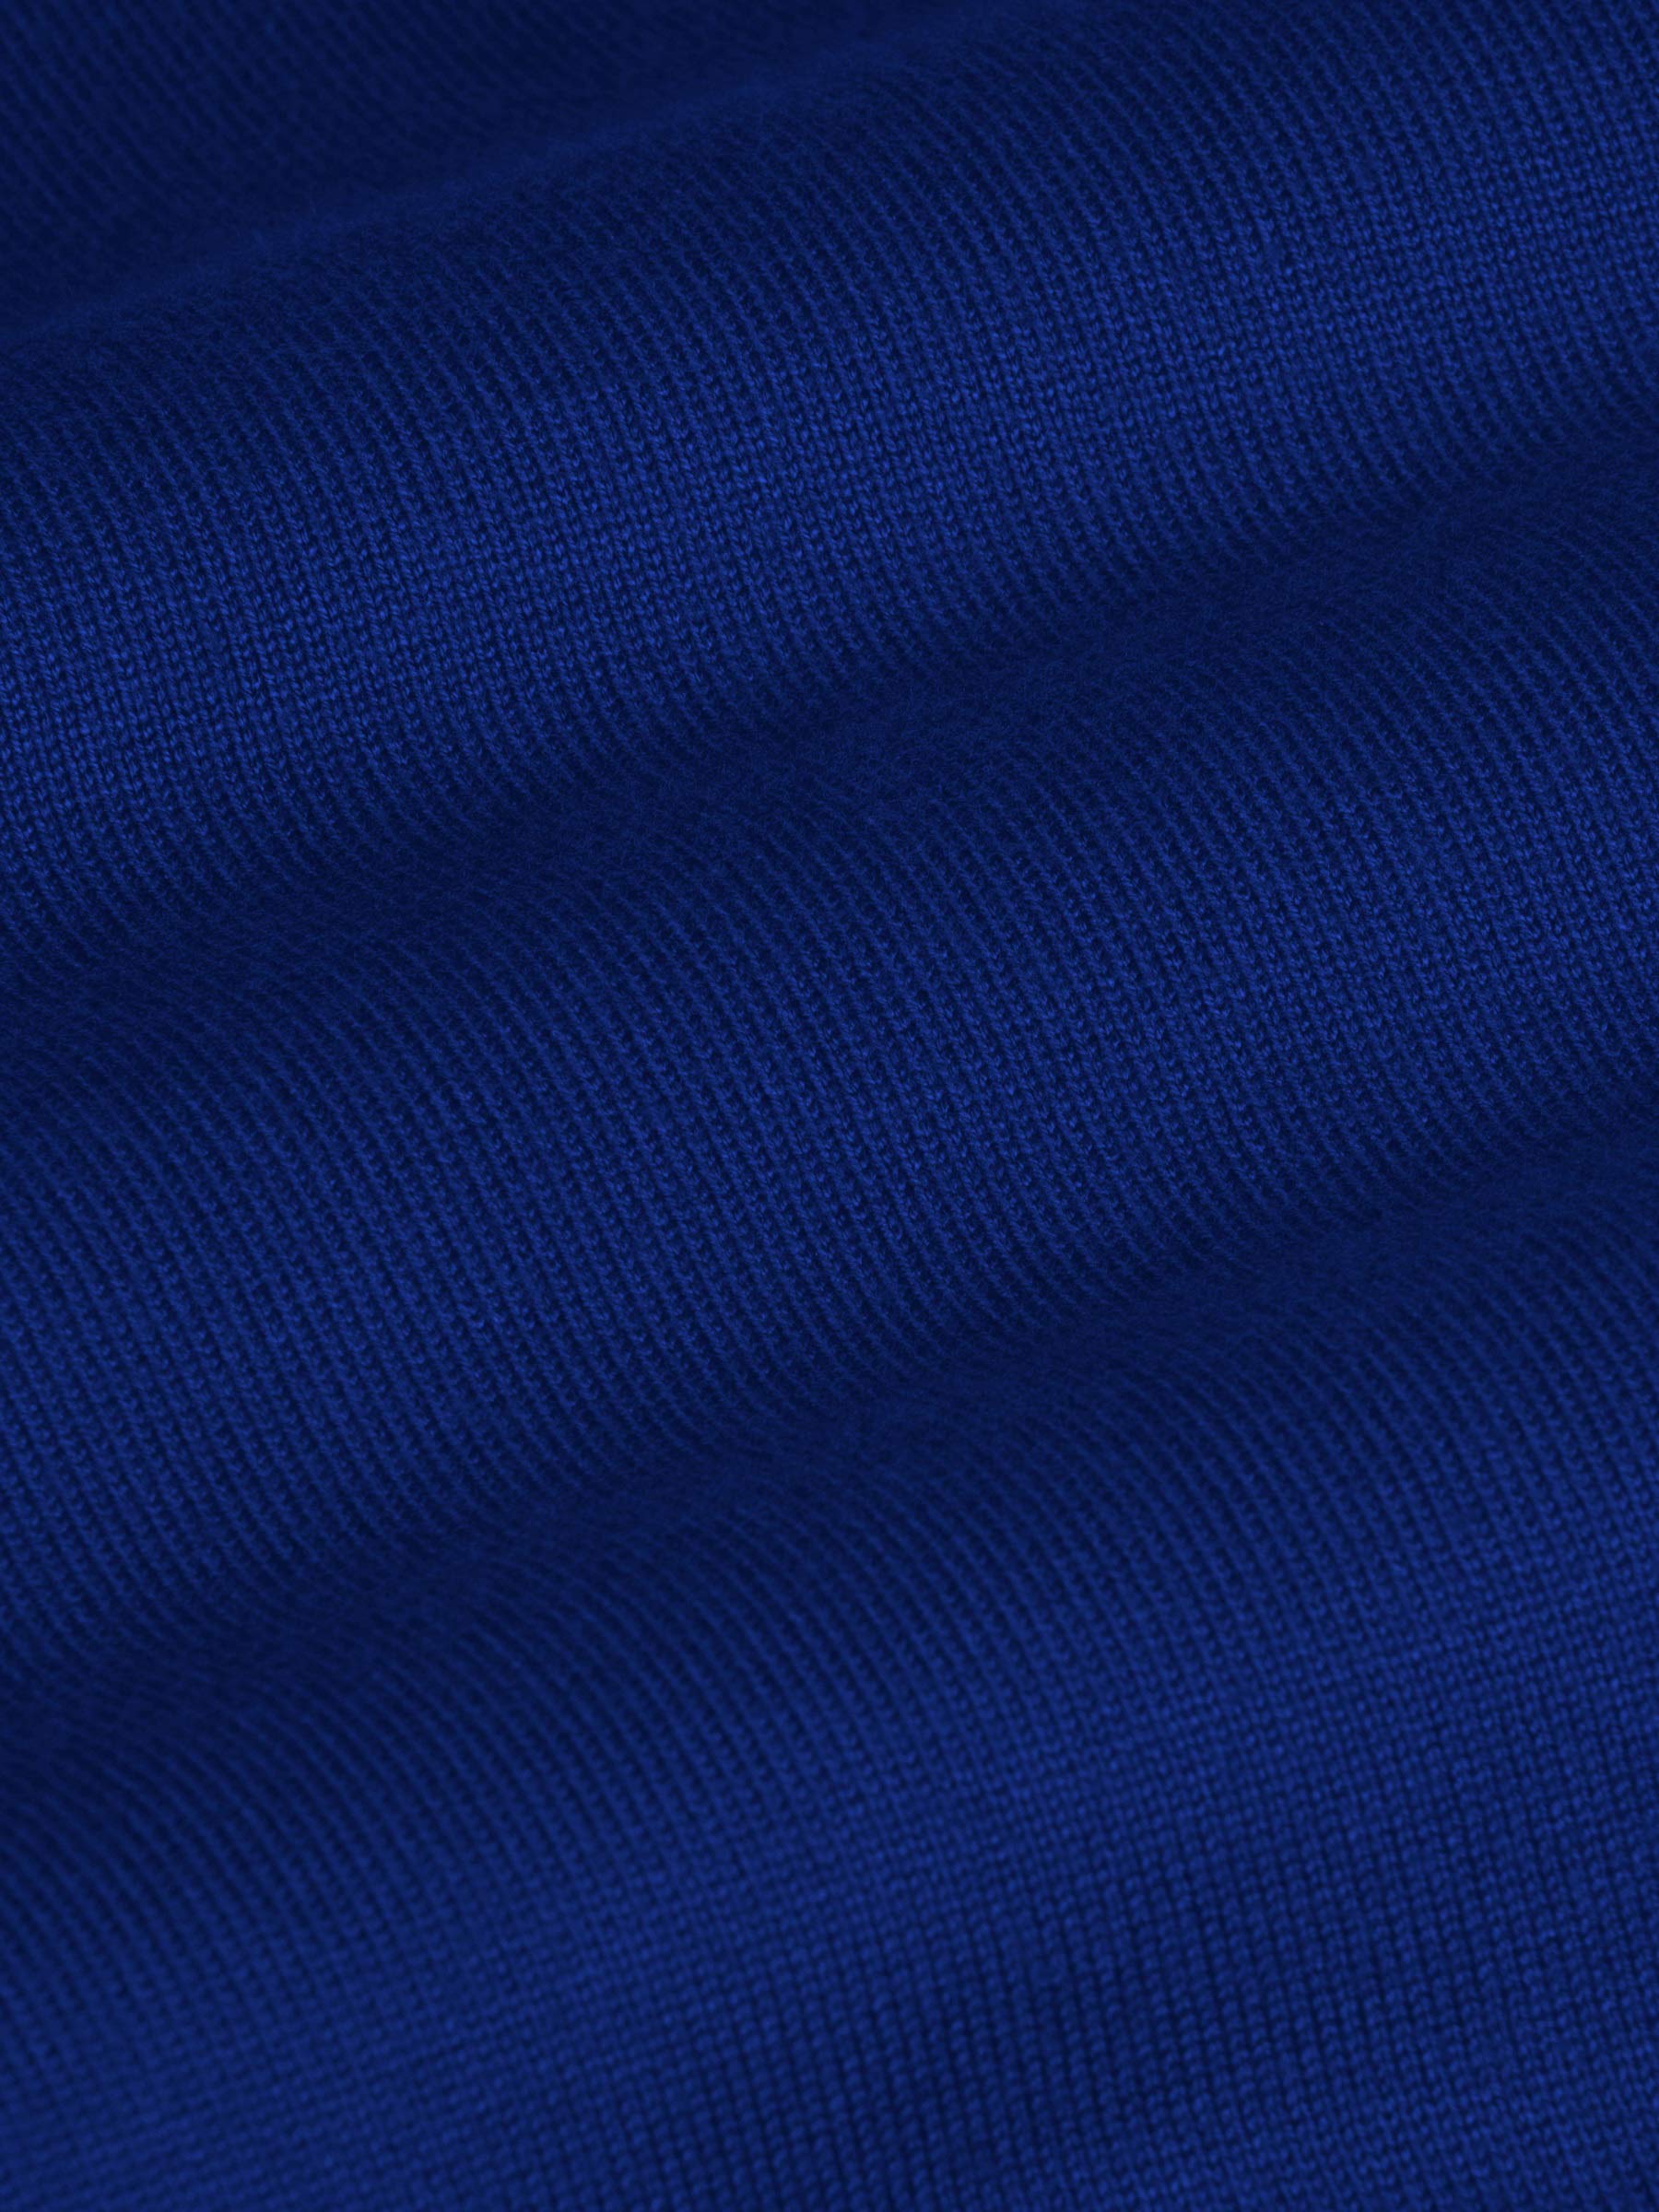 Siena Round-Necked Royal Blue Sweater-S